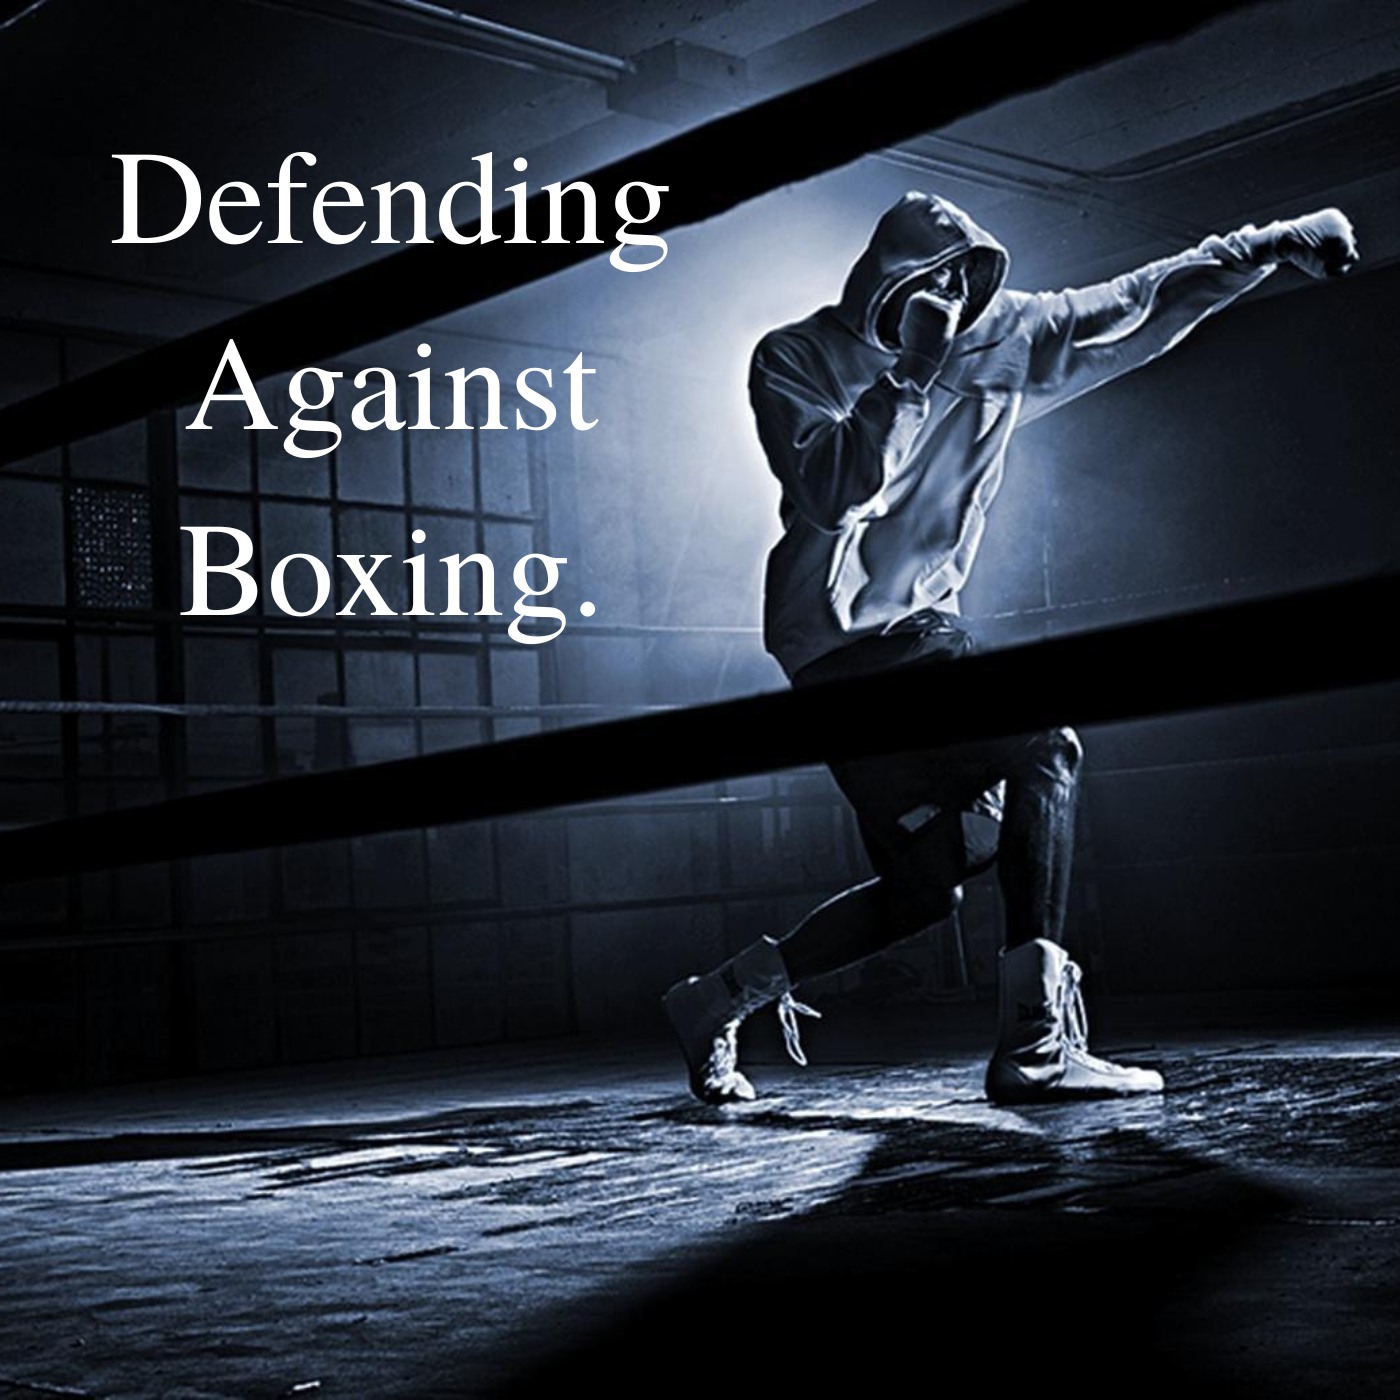 Defending Against Boxing.